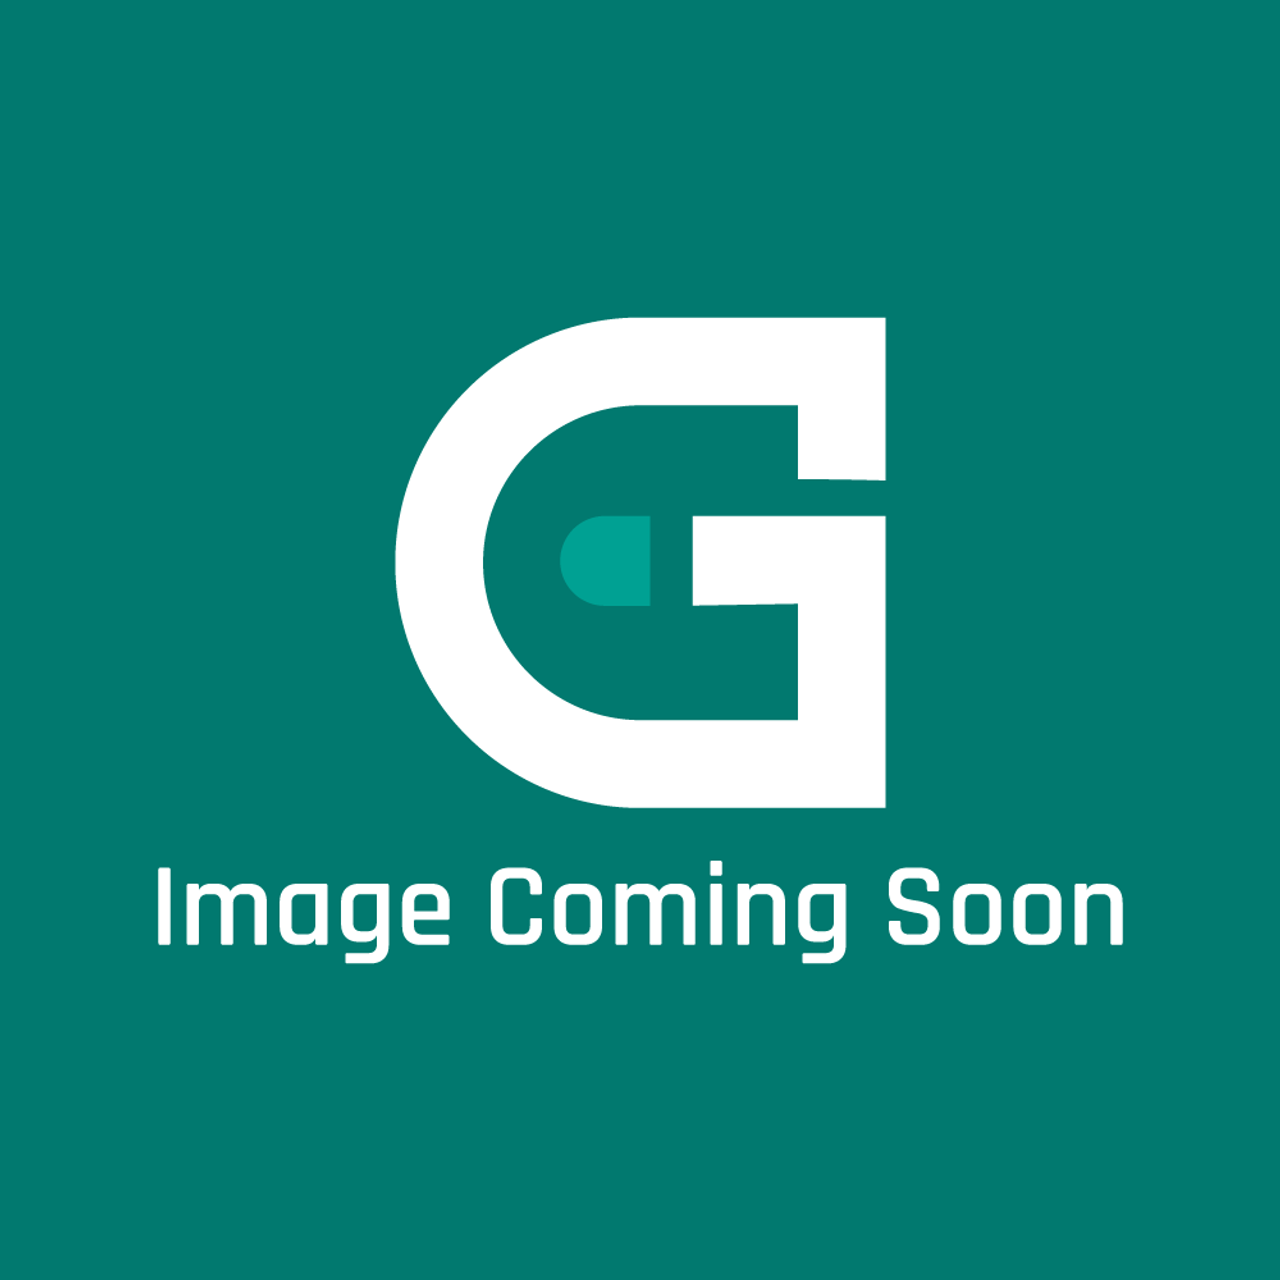 GE Appliances WB02X11445 - Rear Burner Tube - Image Coming Soon!